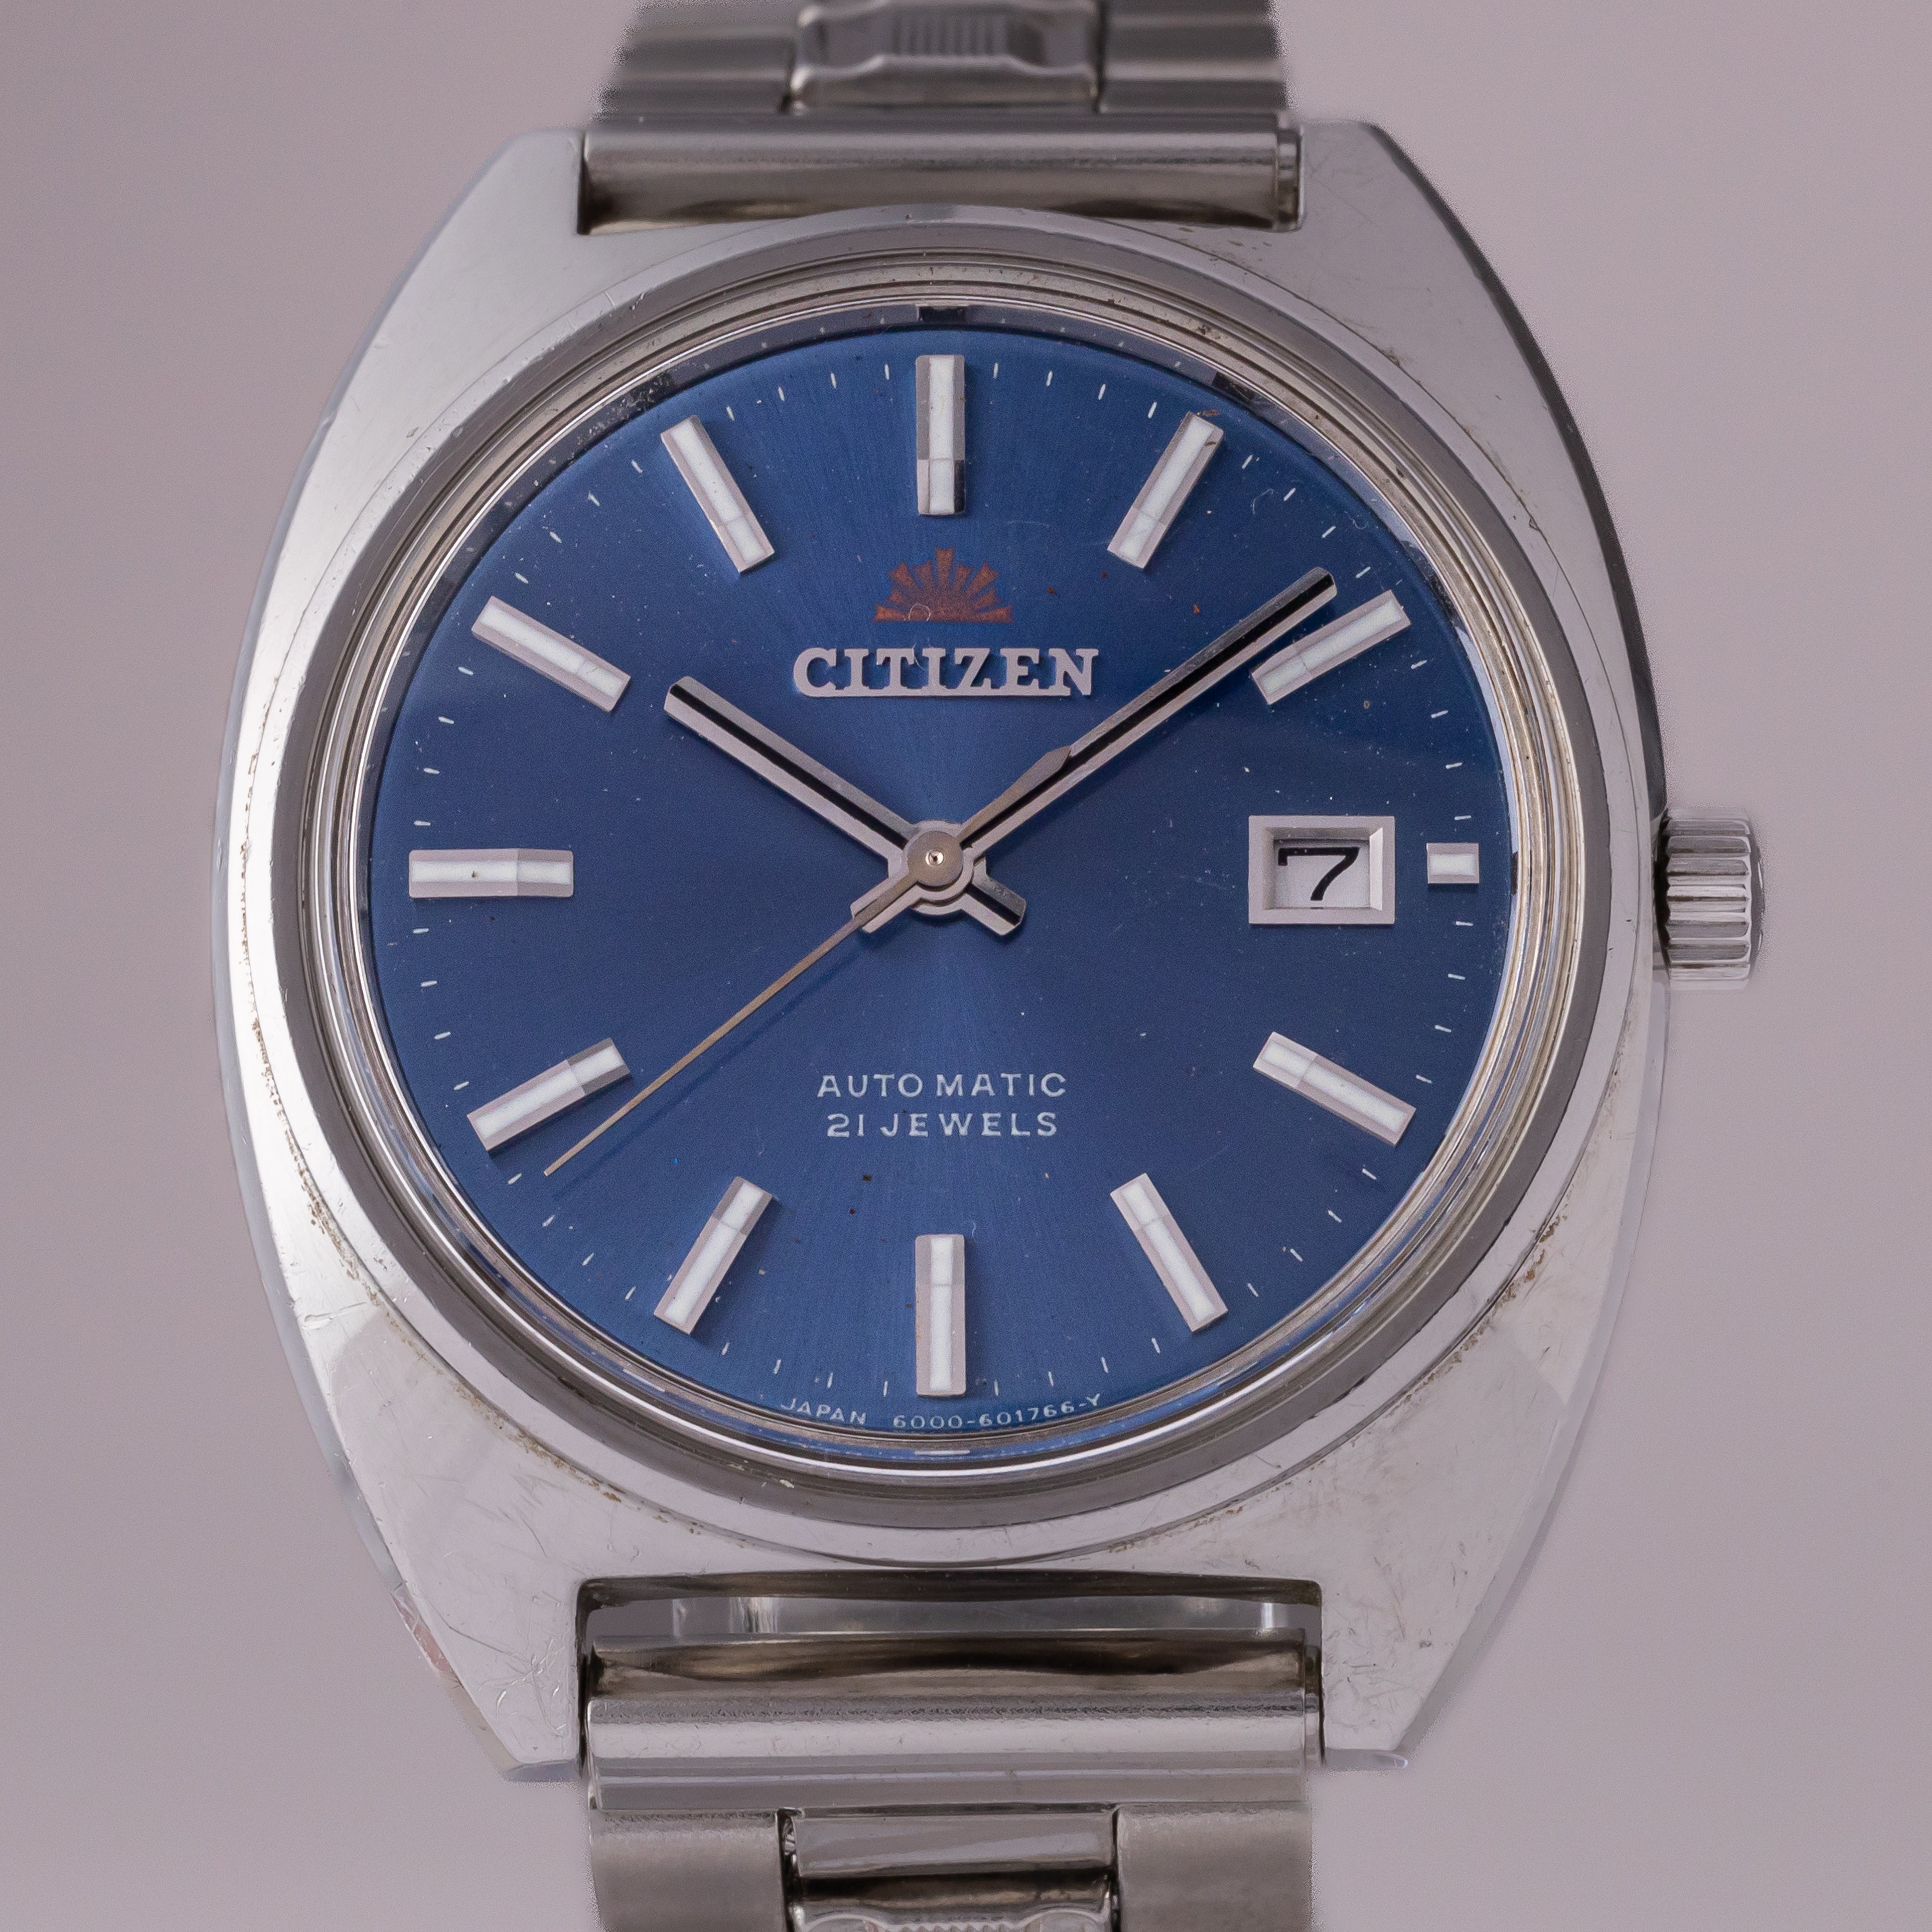 CITIZEN 社外 シチズン オートルーキー 風防内レンズ 実測32.98/CITIZEN Auto-rookie Watch glass (管理SDN-C210)